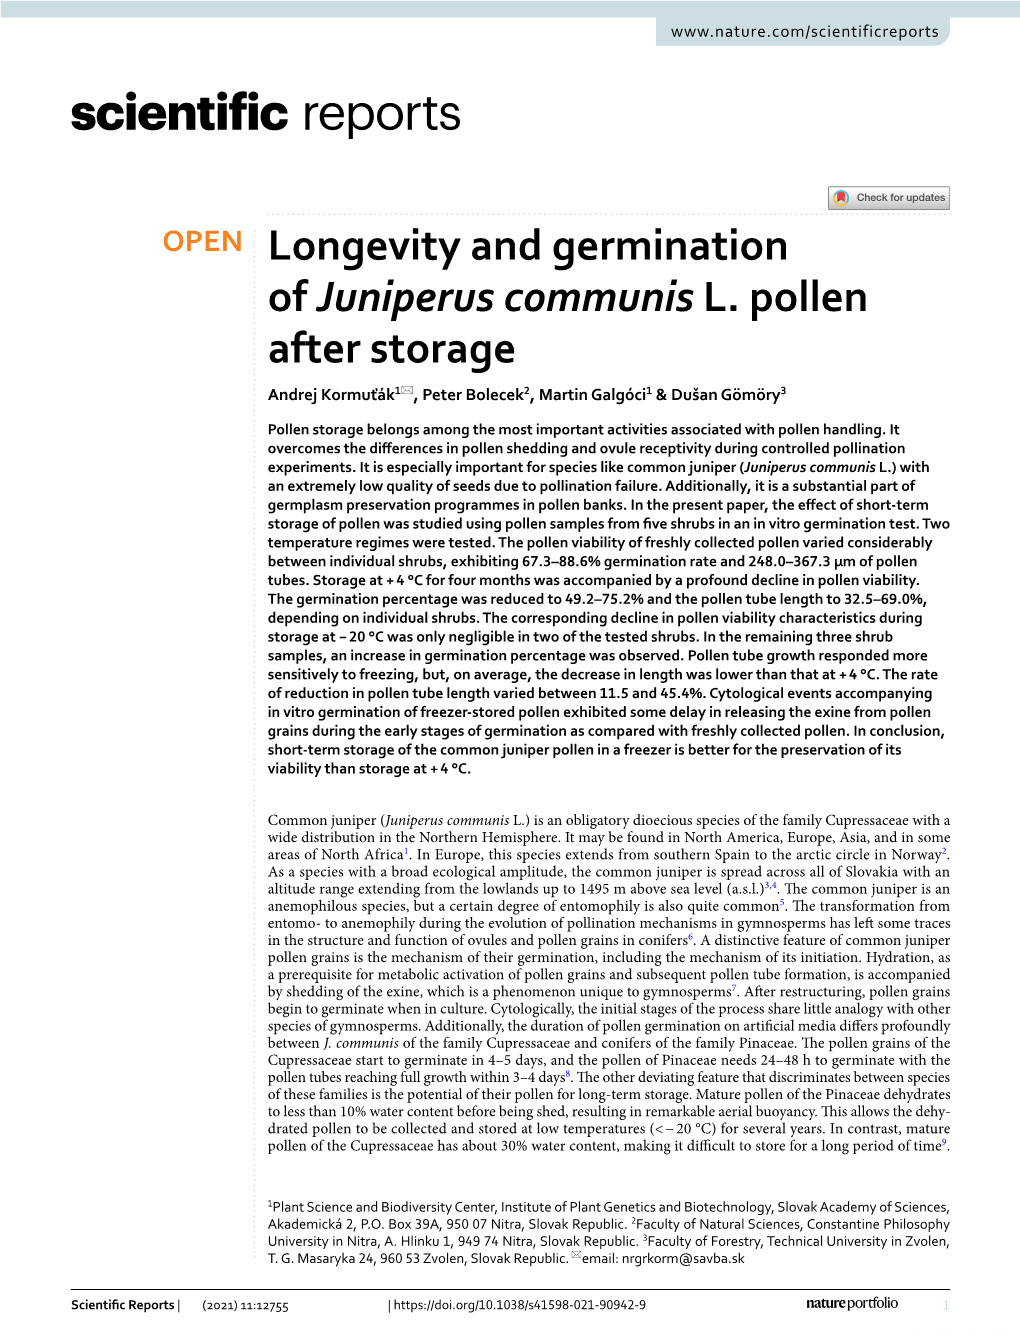 Longevity and Germination of Juniperus Communis L. Pollen After Storage Andrej Kormuťák1*, Peter Bolecek2, Martin Galgóci1 & Dušan Gömöry3